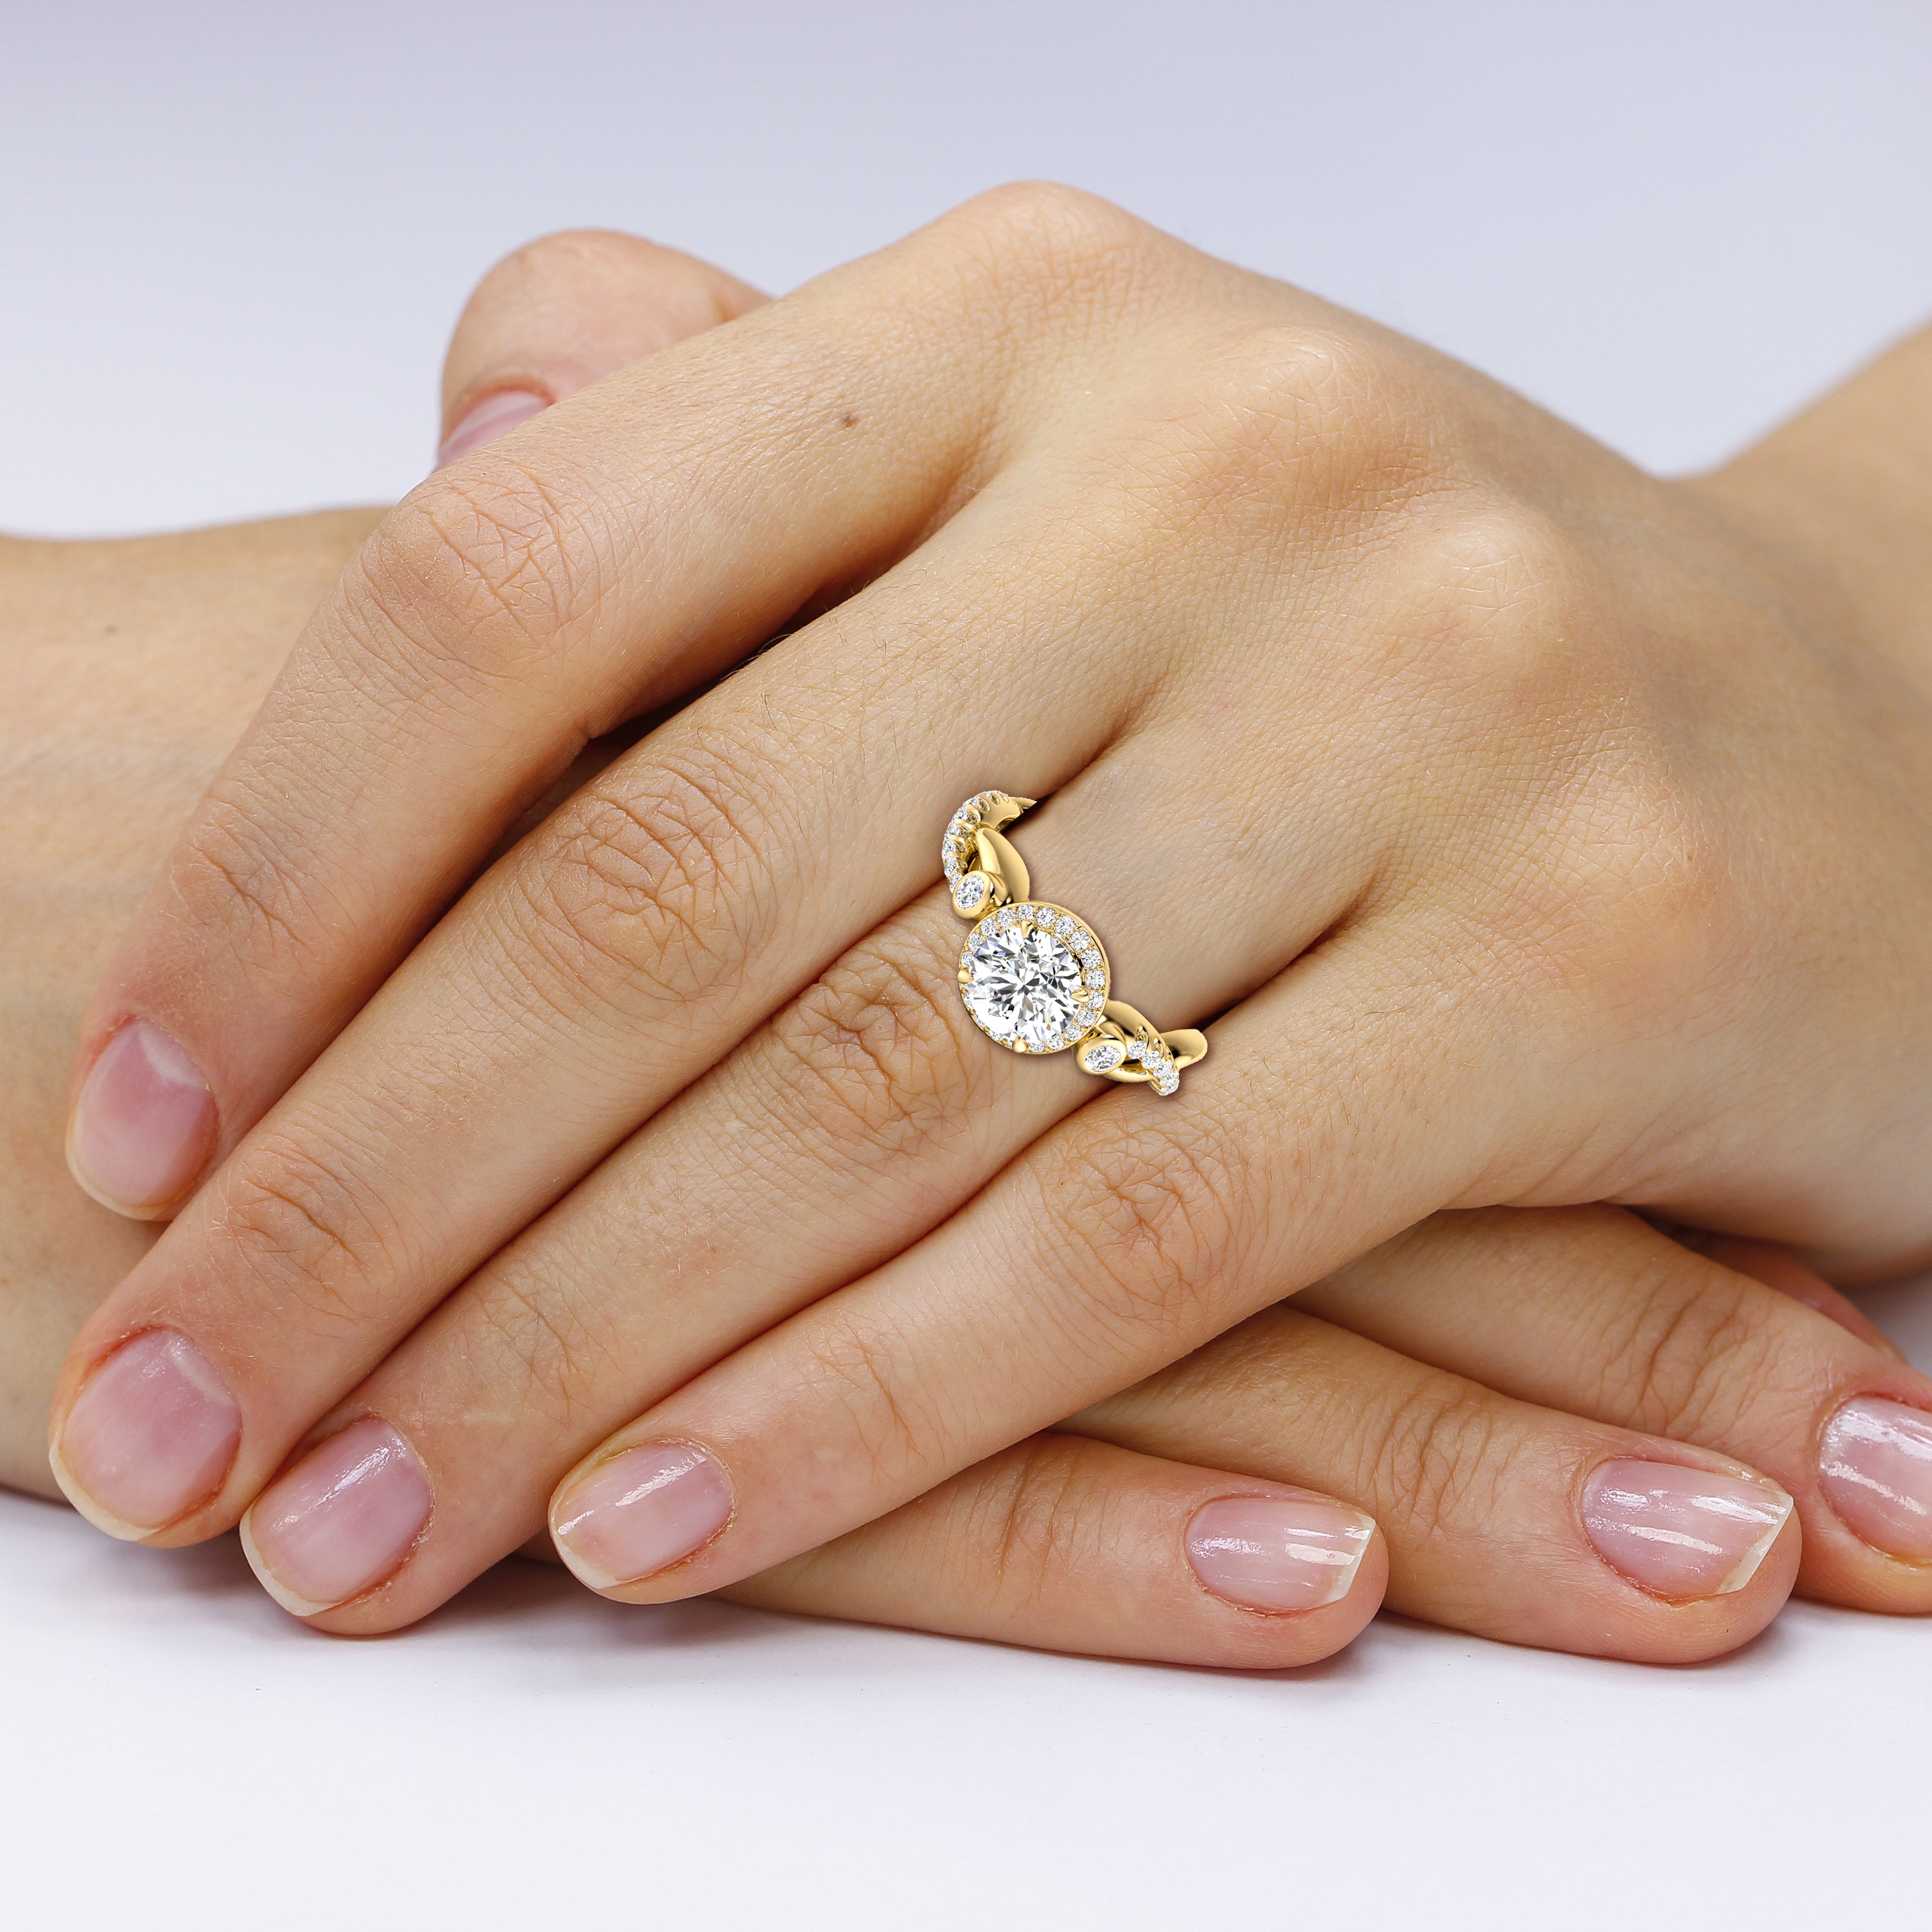 0.82-1.97 CT Round Cut Diamonds - Engagement Ring